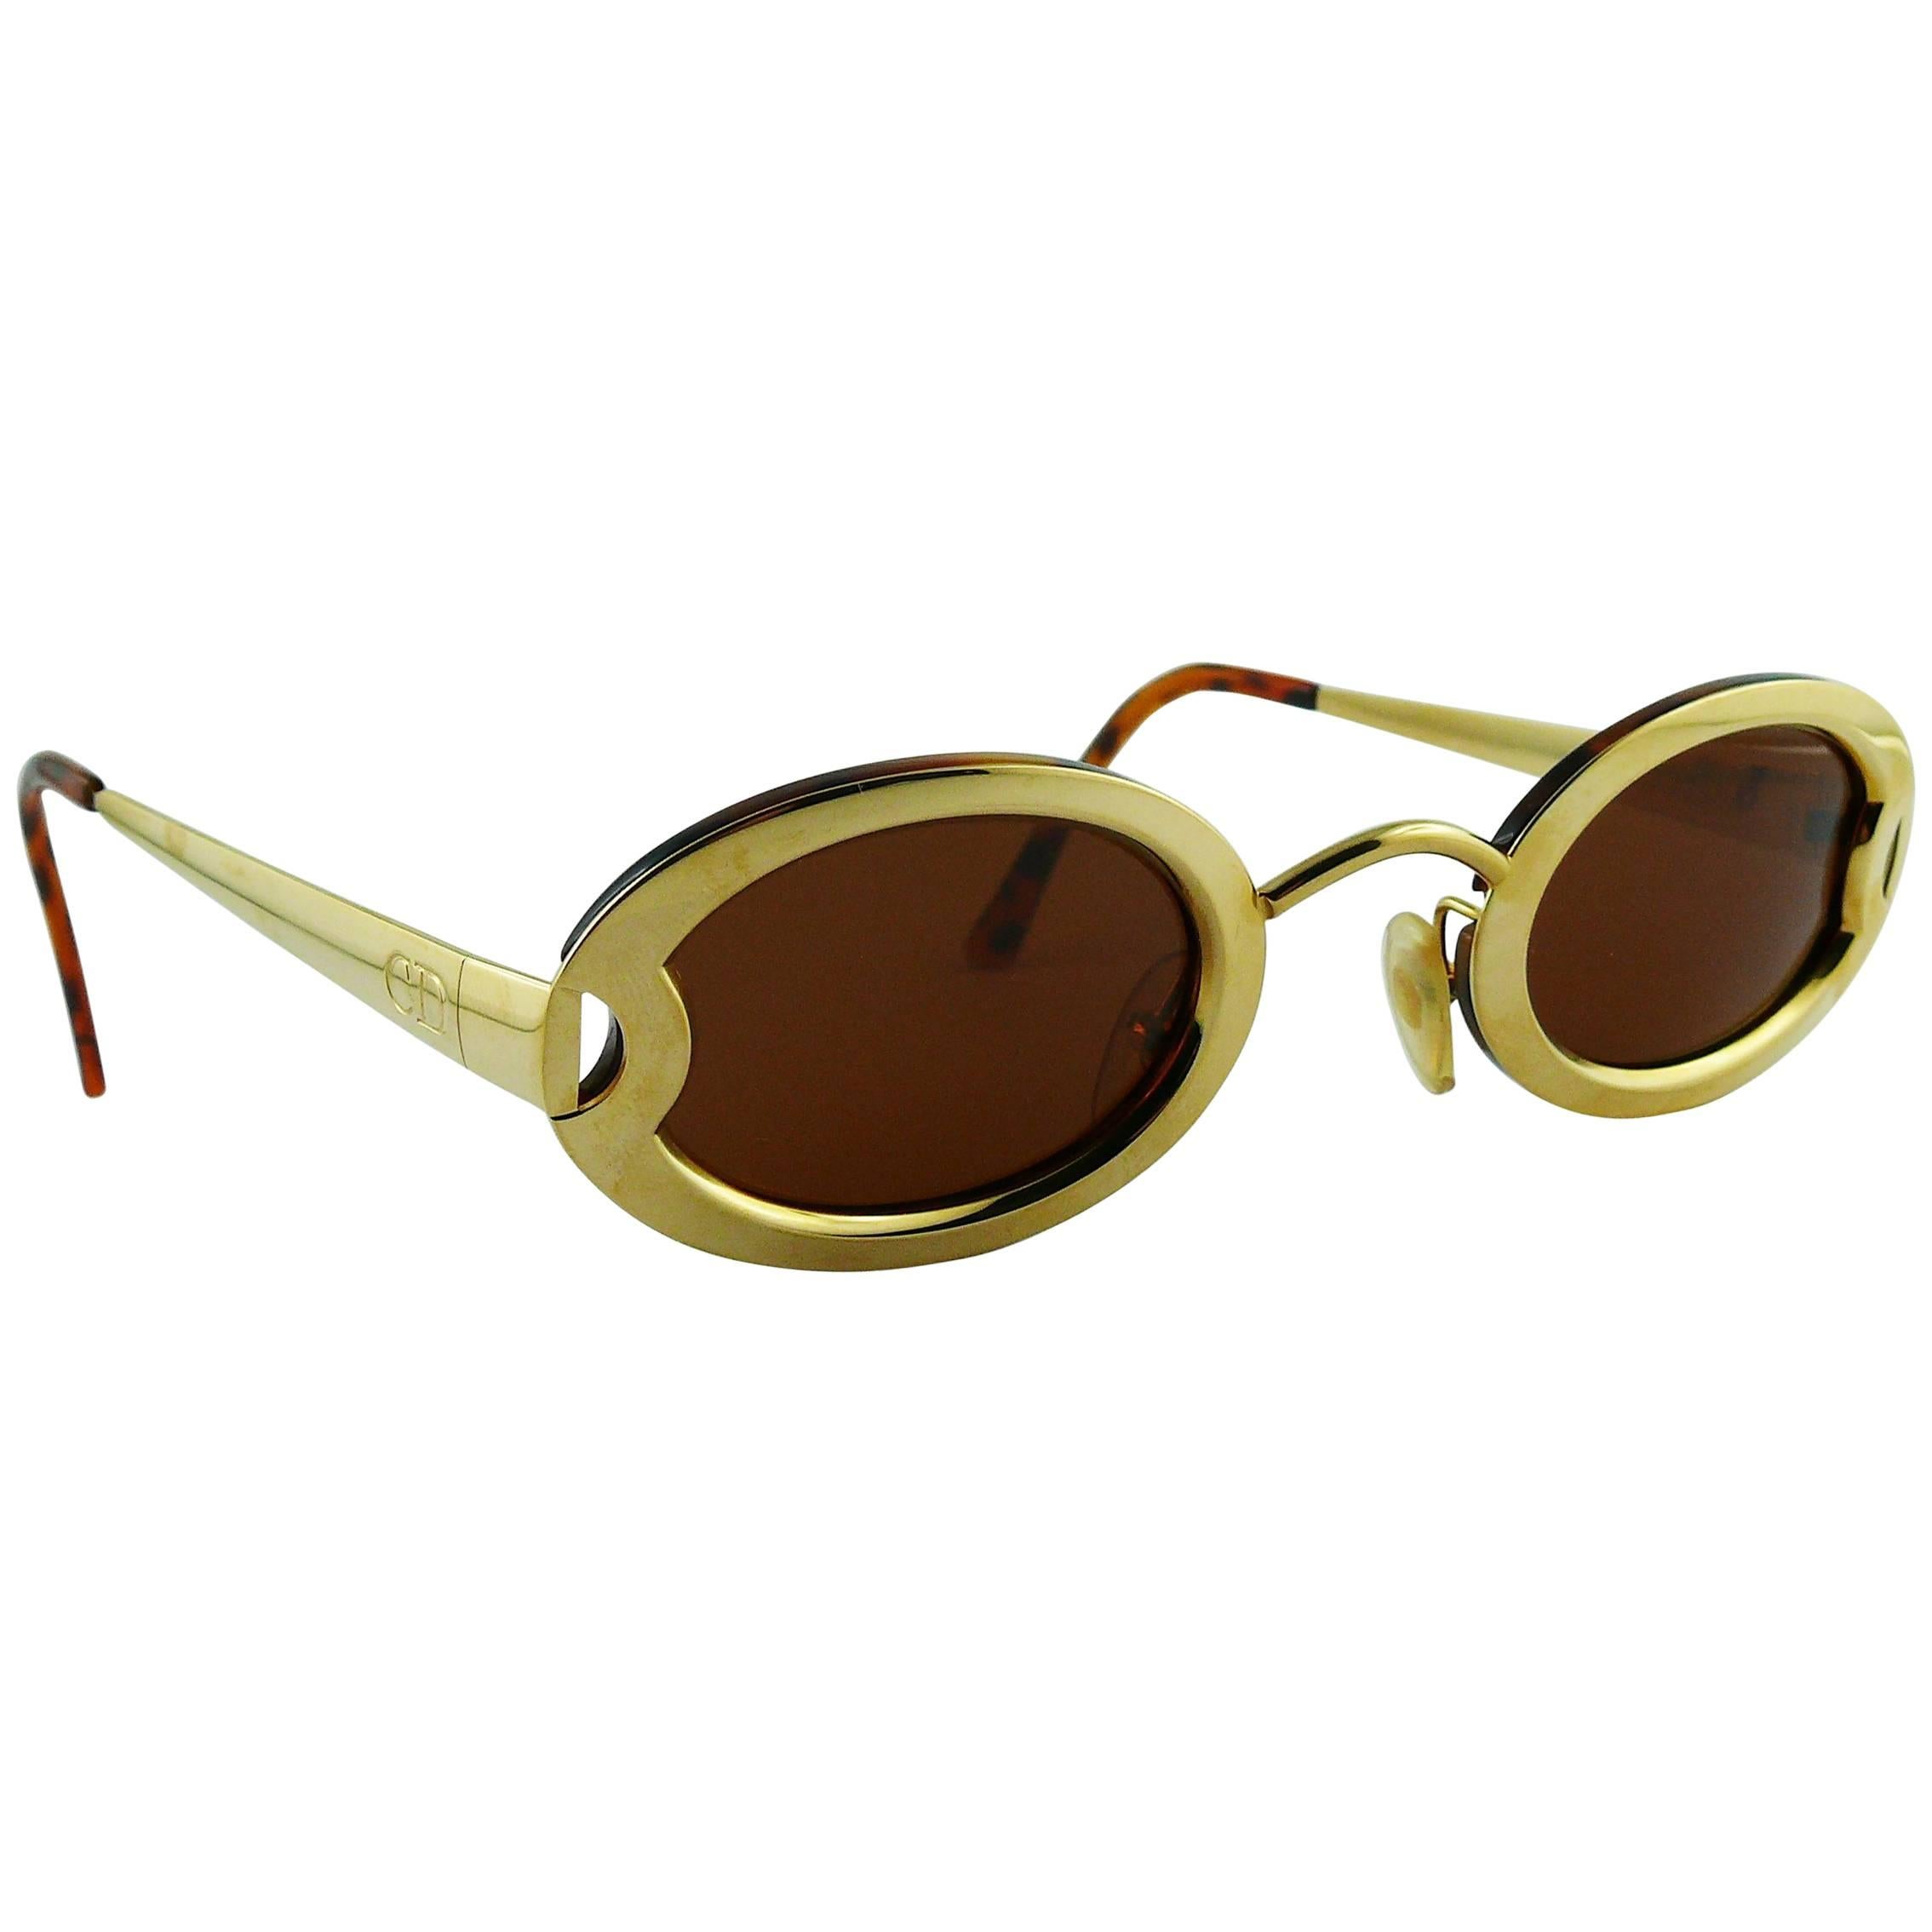 NOS New Old Stock bruine zonnebril Jaren 1980 Christian Dior vintage Accessoires Zonnebrillen & Eyewear Zonnebrillen 